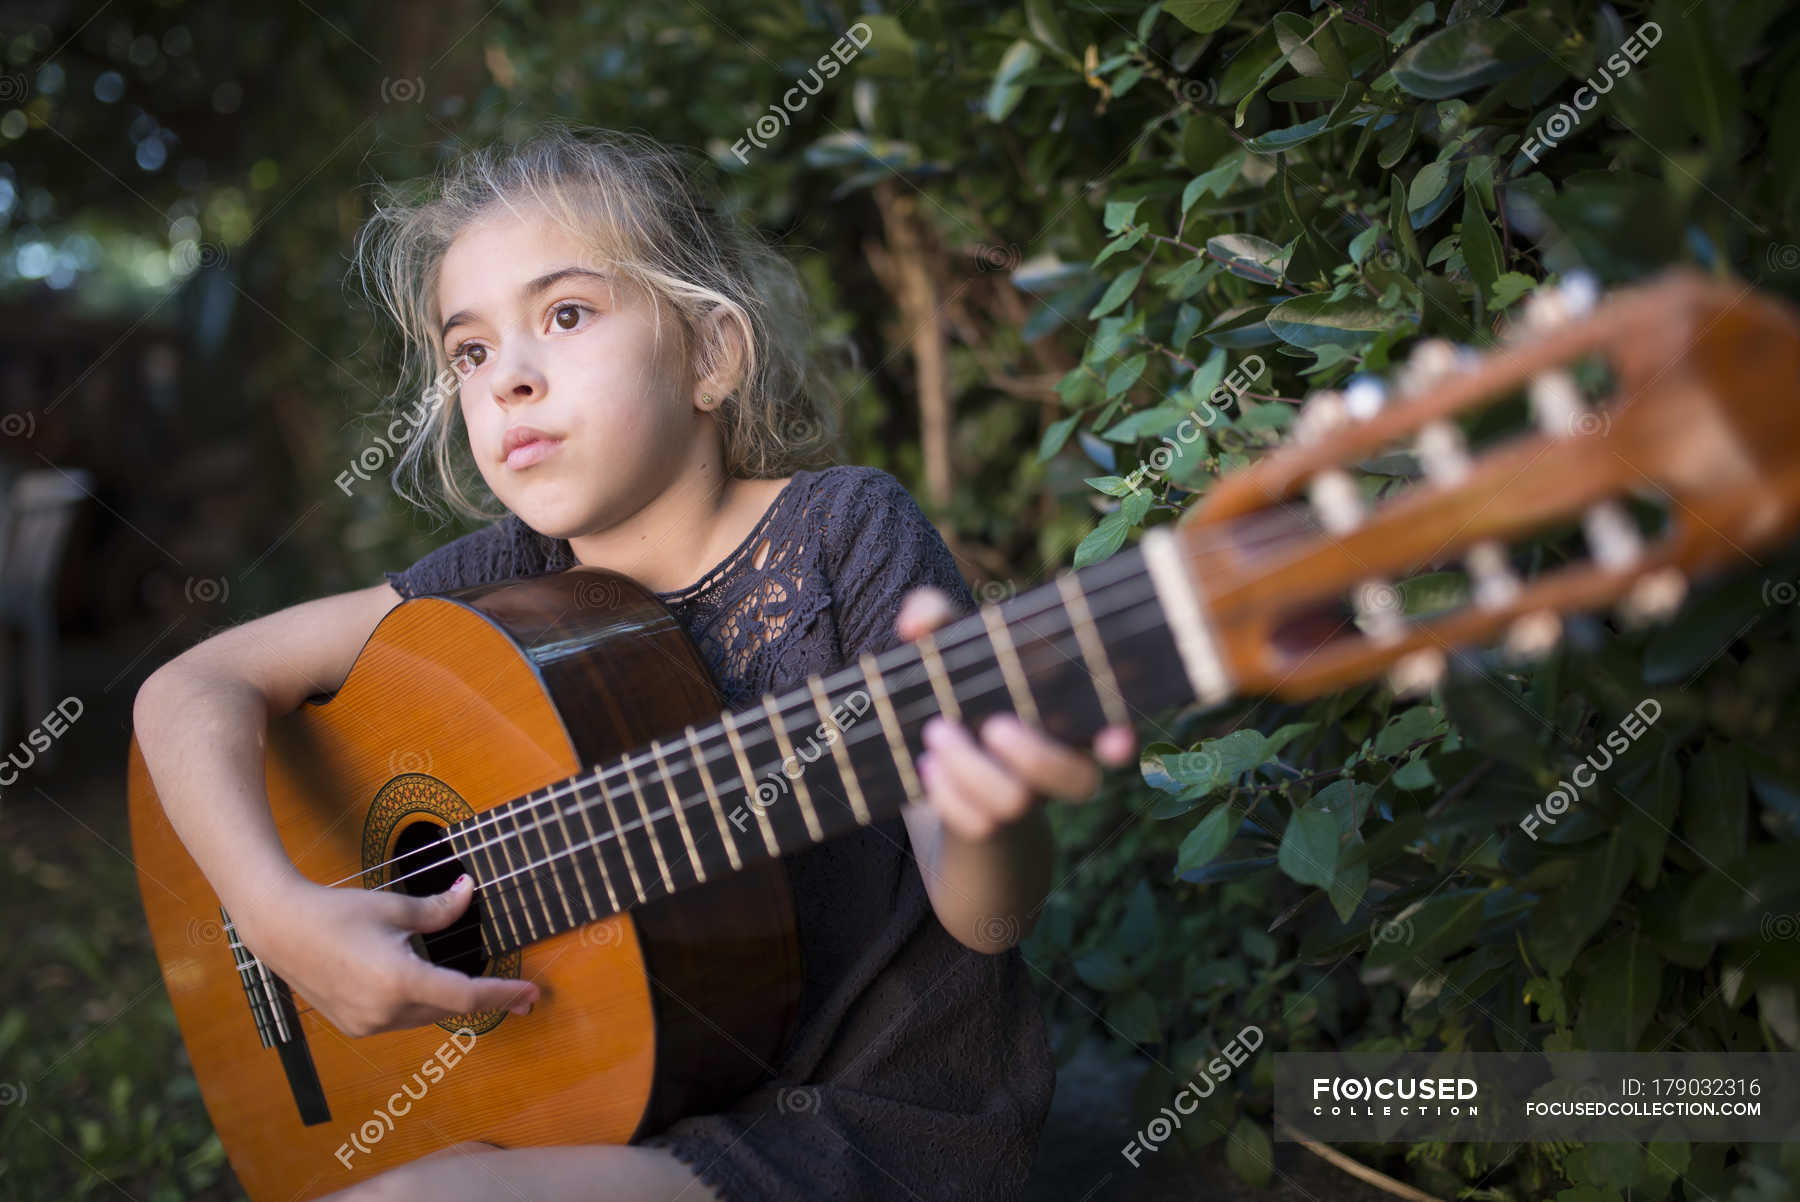 Girl playing spanish guitar outdoors — Stock Photo | #179032316